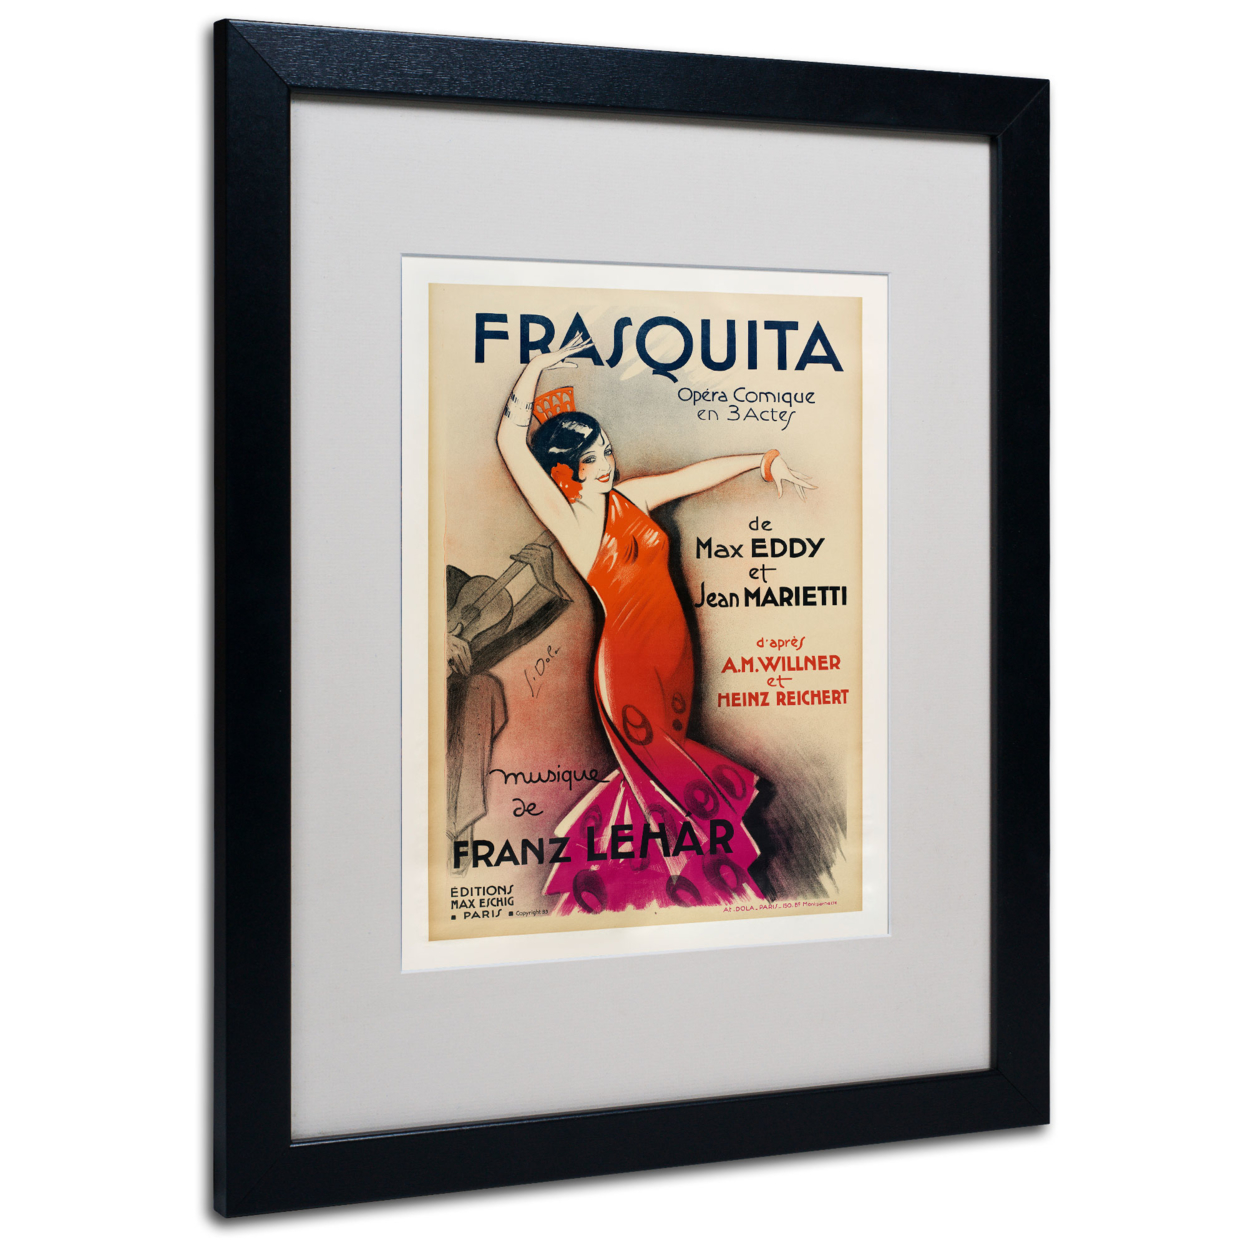 Frasquita' Black Wooden Framed Art 18 X 22 Inches